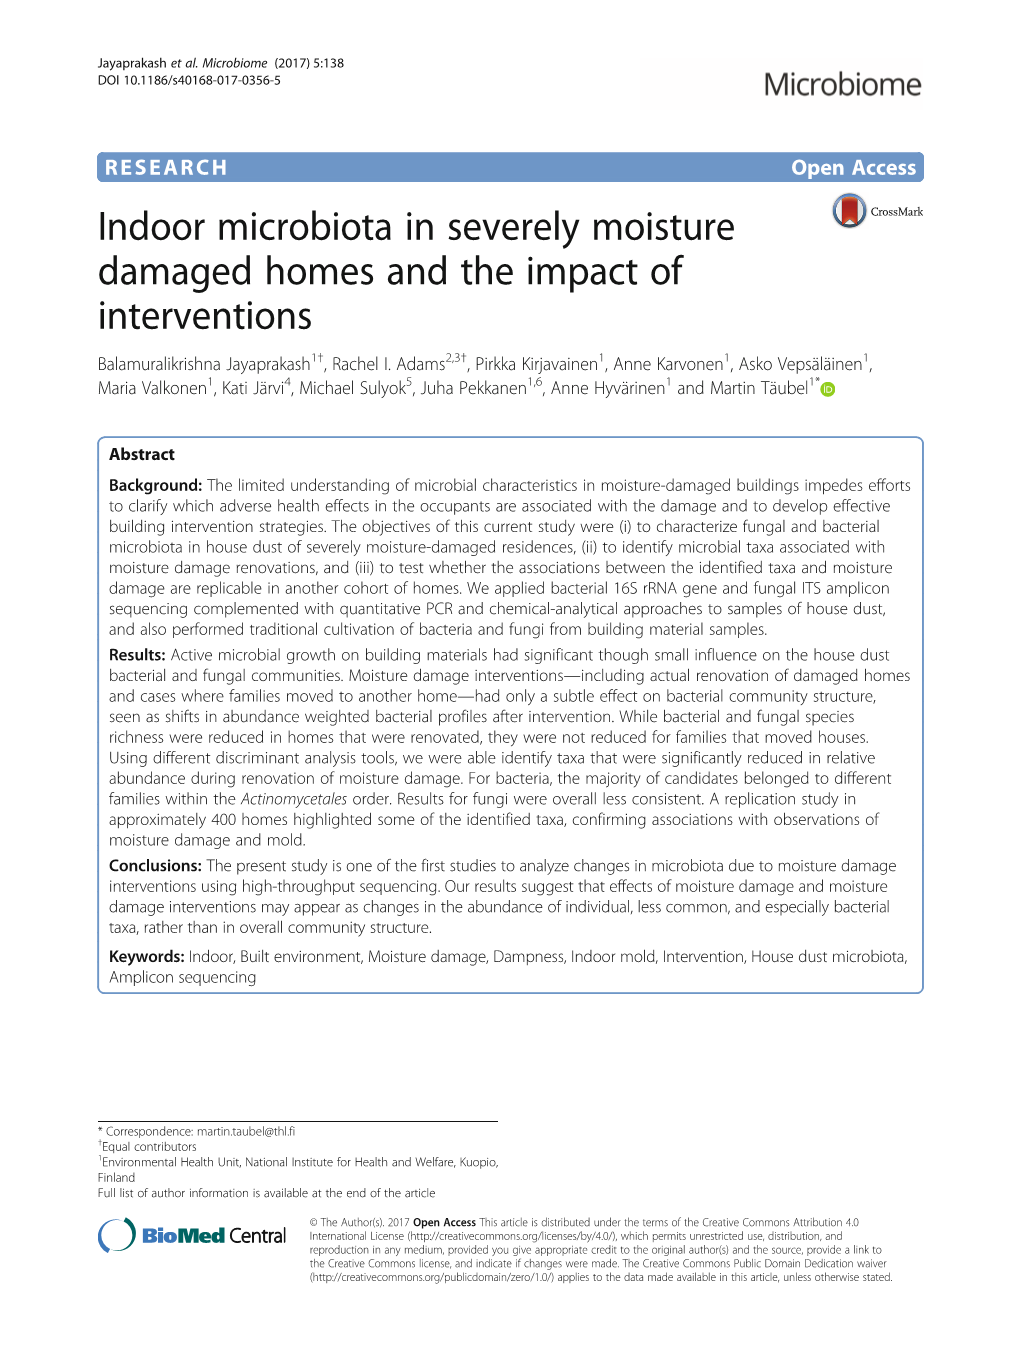 Indoor Microbiota in Severely Moisture Damaged Homes and the Impact of Interventions Balamuralikrishna Jayaprakash1†, Rachel I